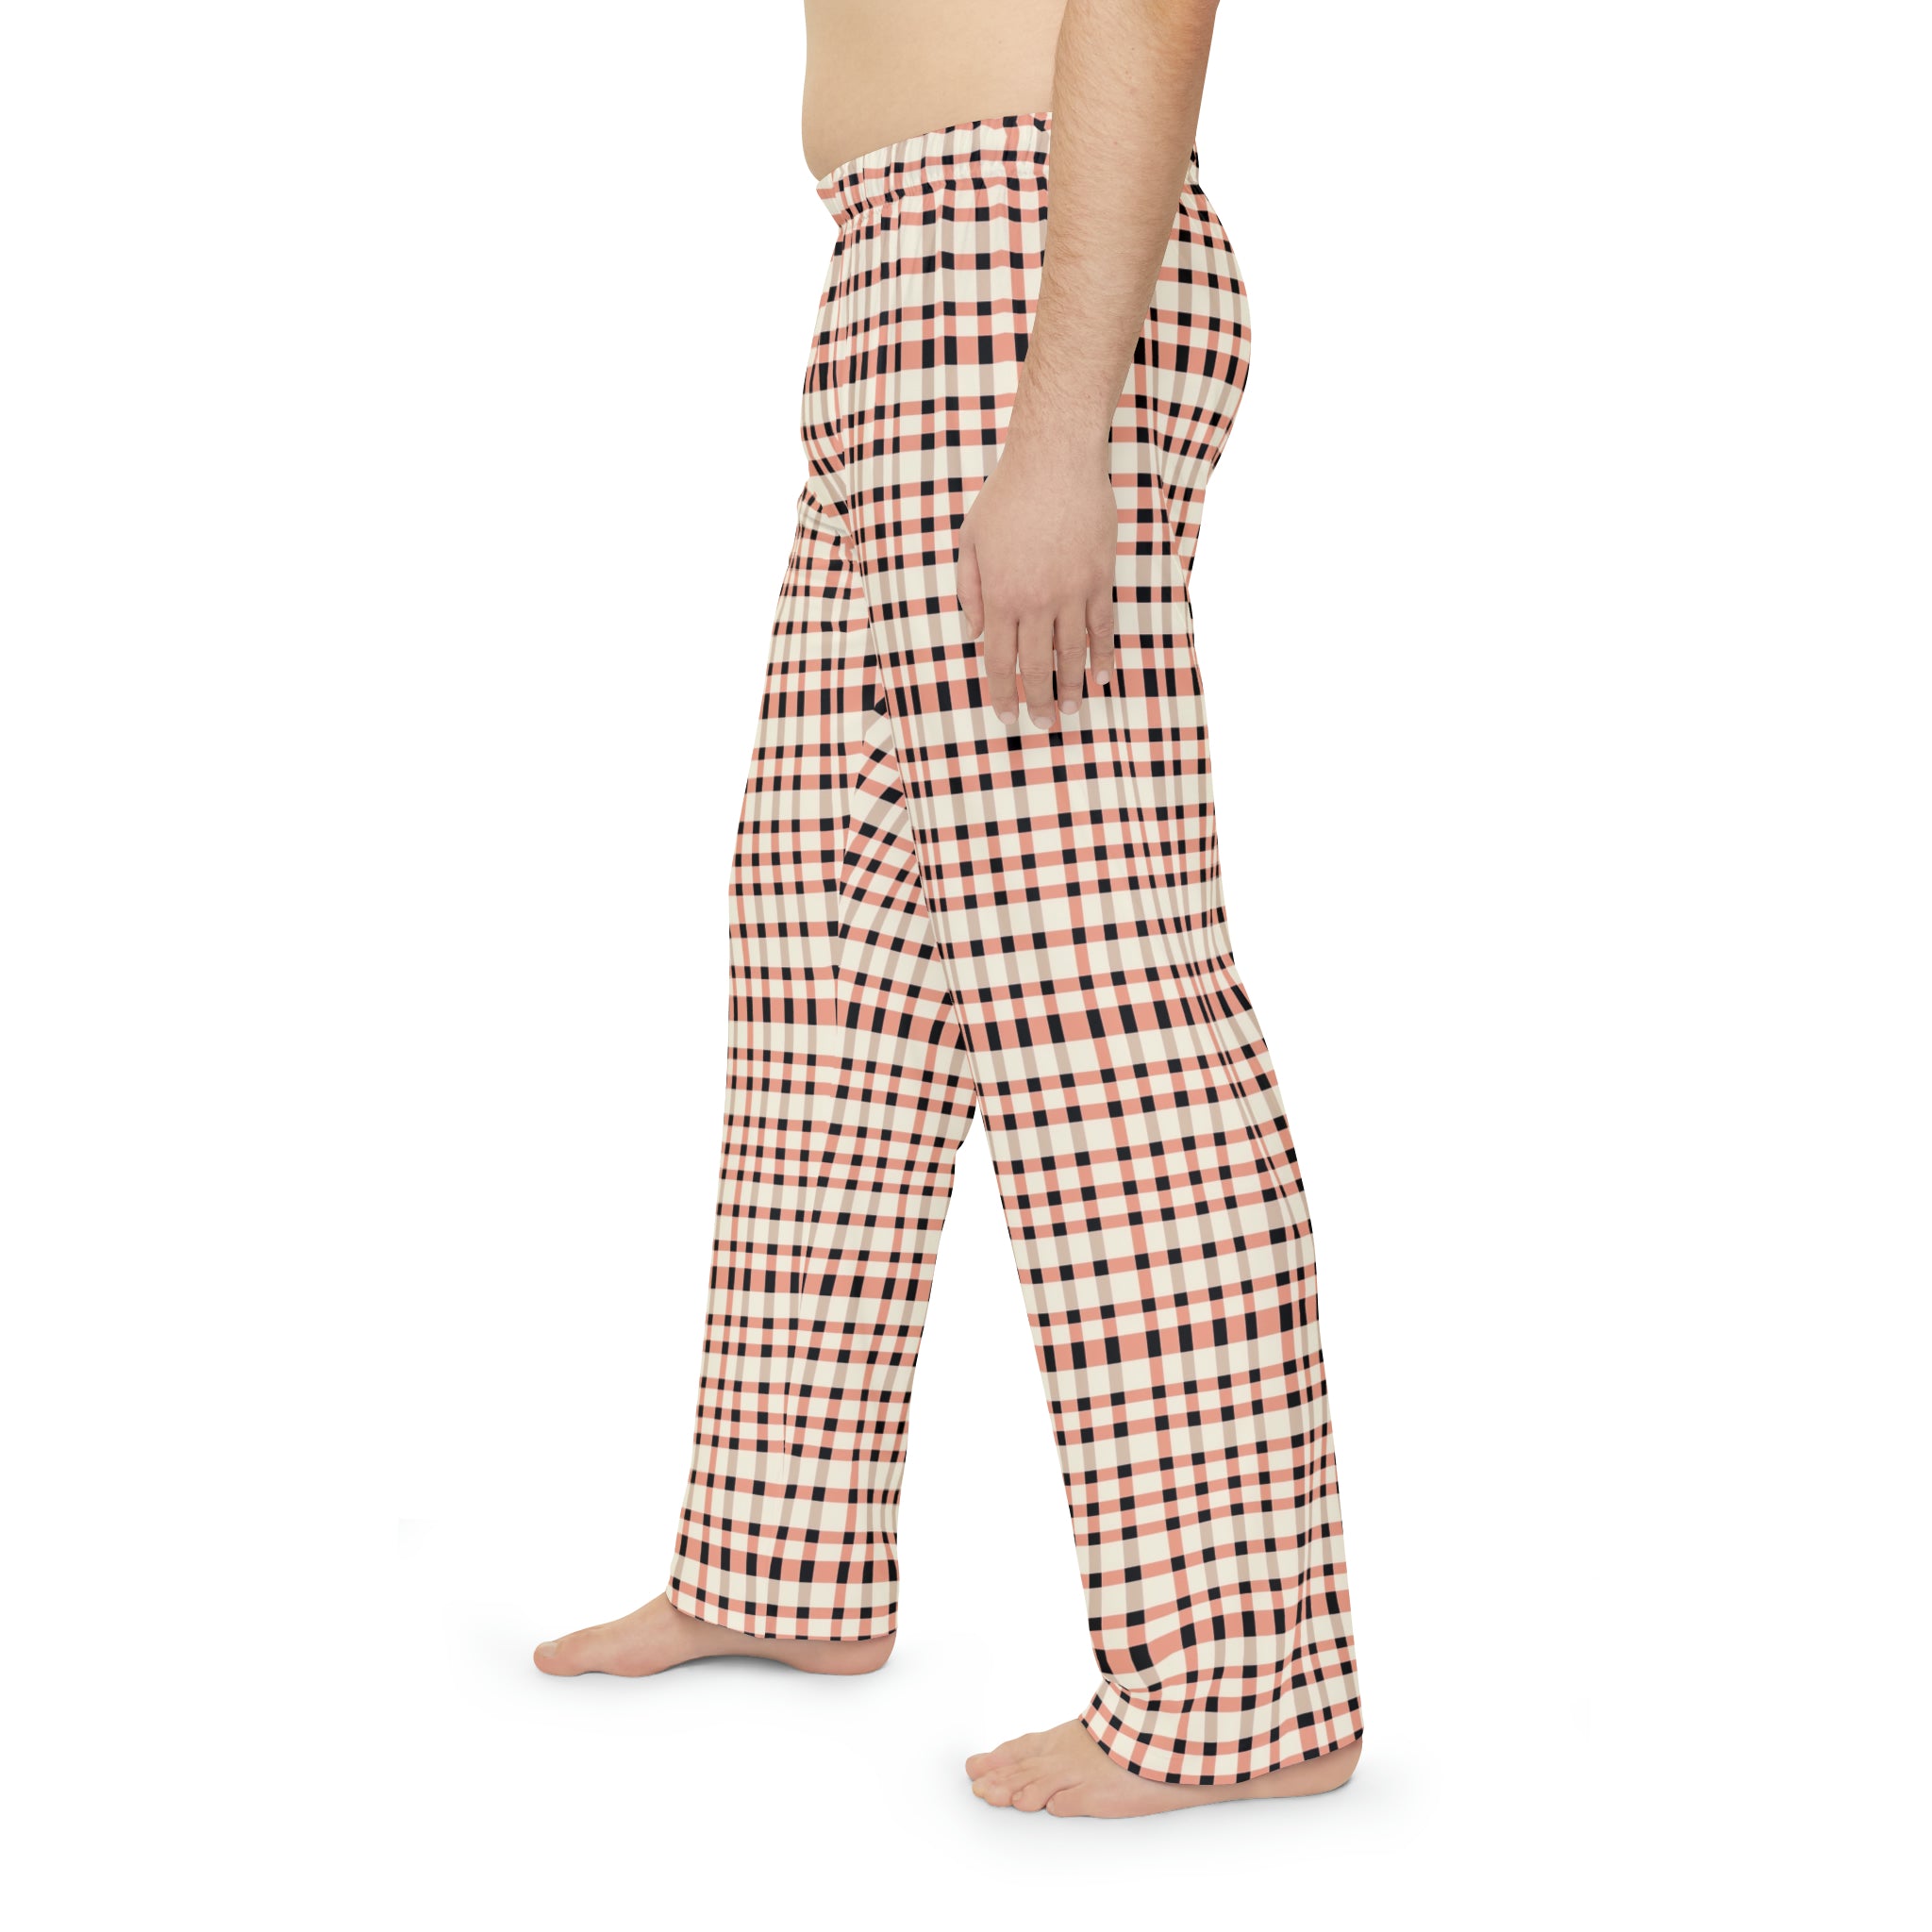 Men's Pajama Pants (AOP) - Seamless Checkered Designs 23